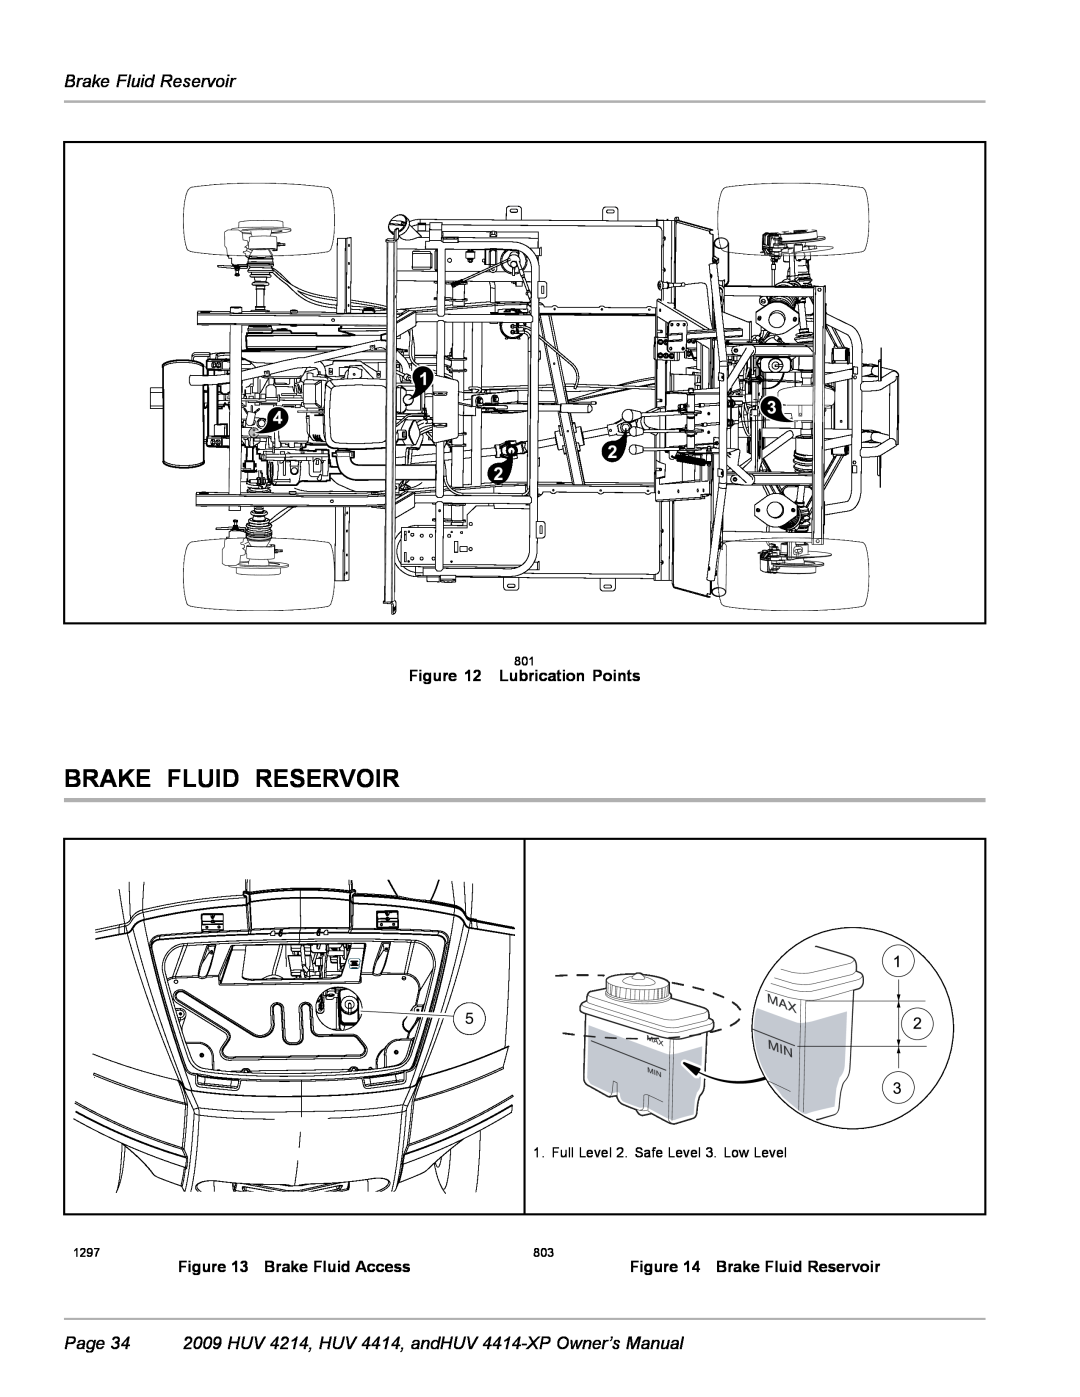 Husqvarna Brake Fluid Reservoir, Page 34 2009 HUV 4214, HUV 4414, andHUV 4414-XP Owner’s Manual, Lubrication Points 